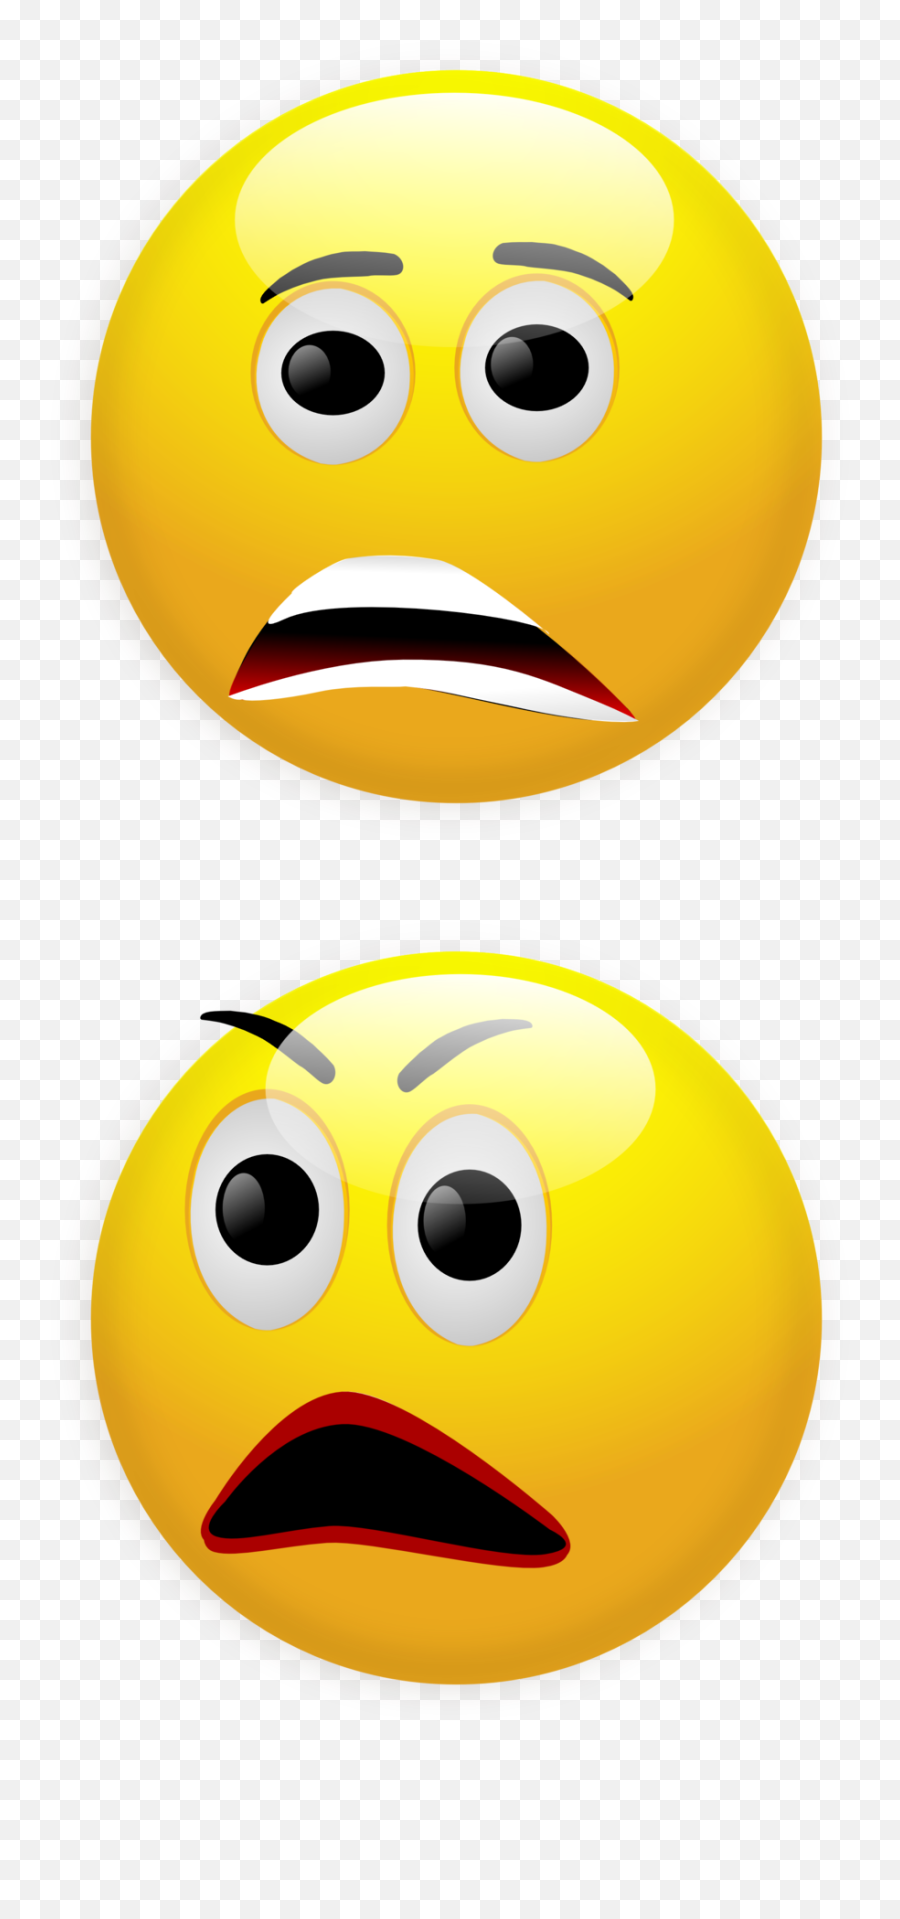 Smiley - Icon So Hai Transparent Cartoon Jingfm Anger Emoji,Emoticon For Mooning